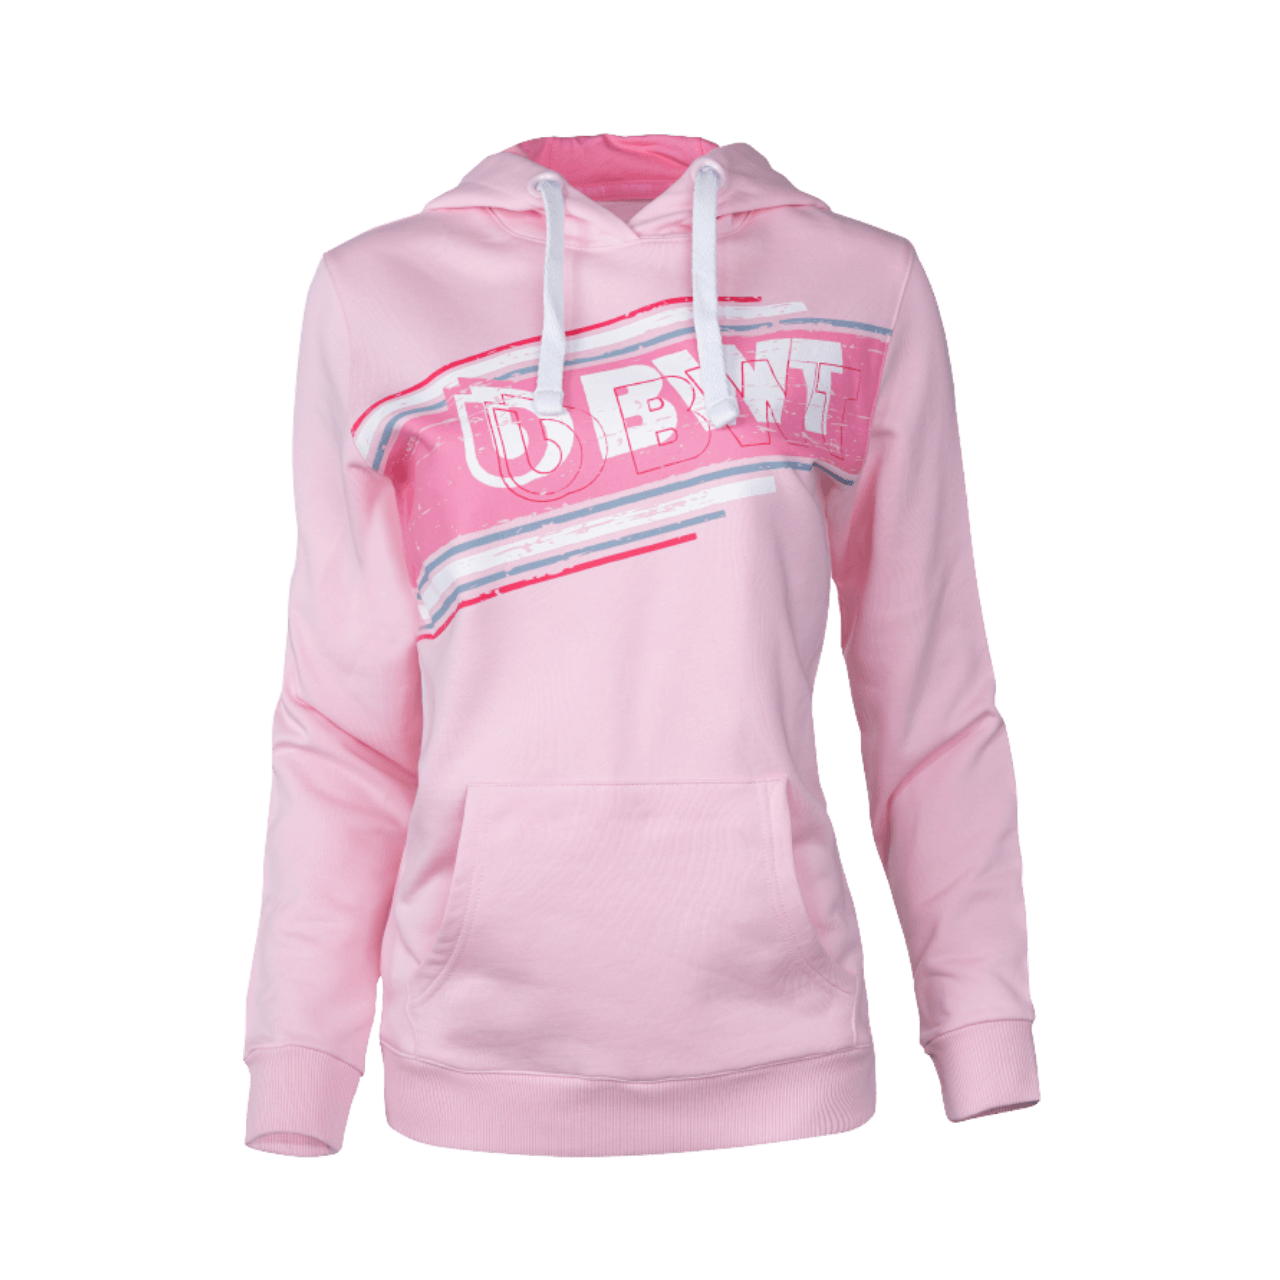 BWT Lifestyle Hoodie Dames roze met wit BWT logo op roze achtergrond op de borst